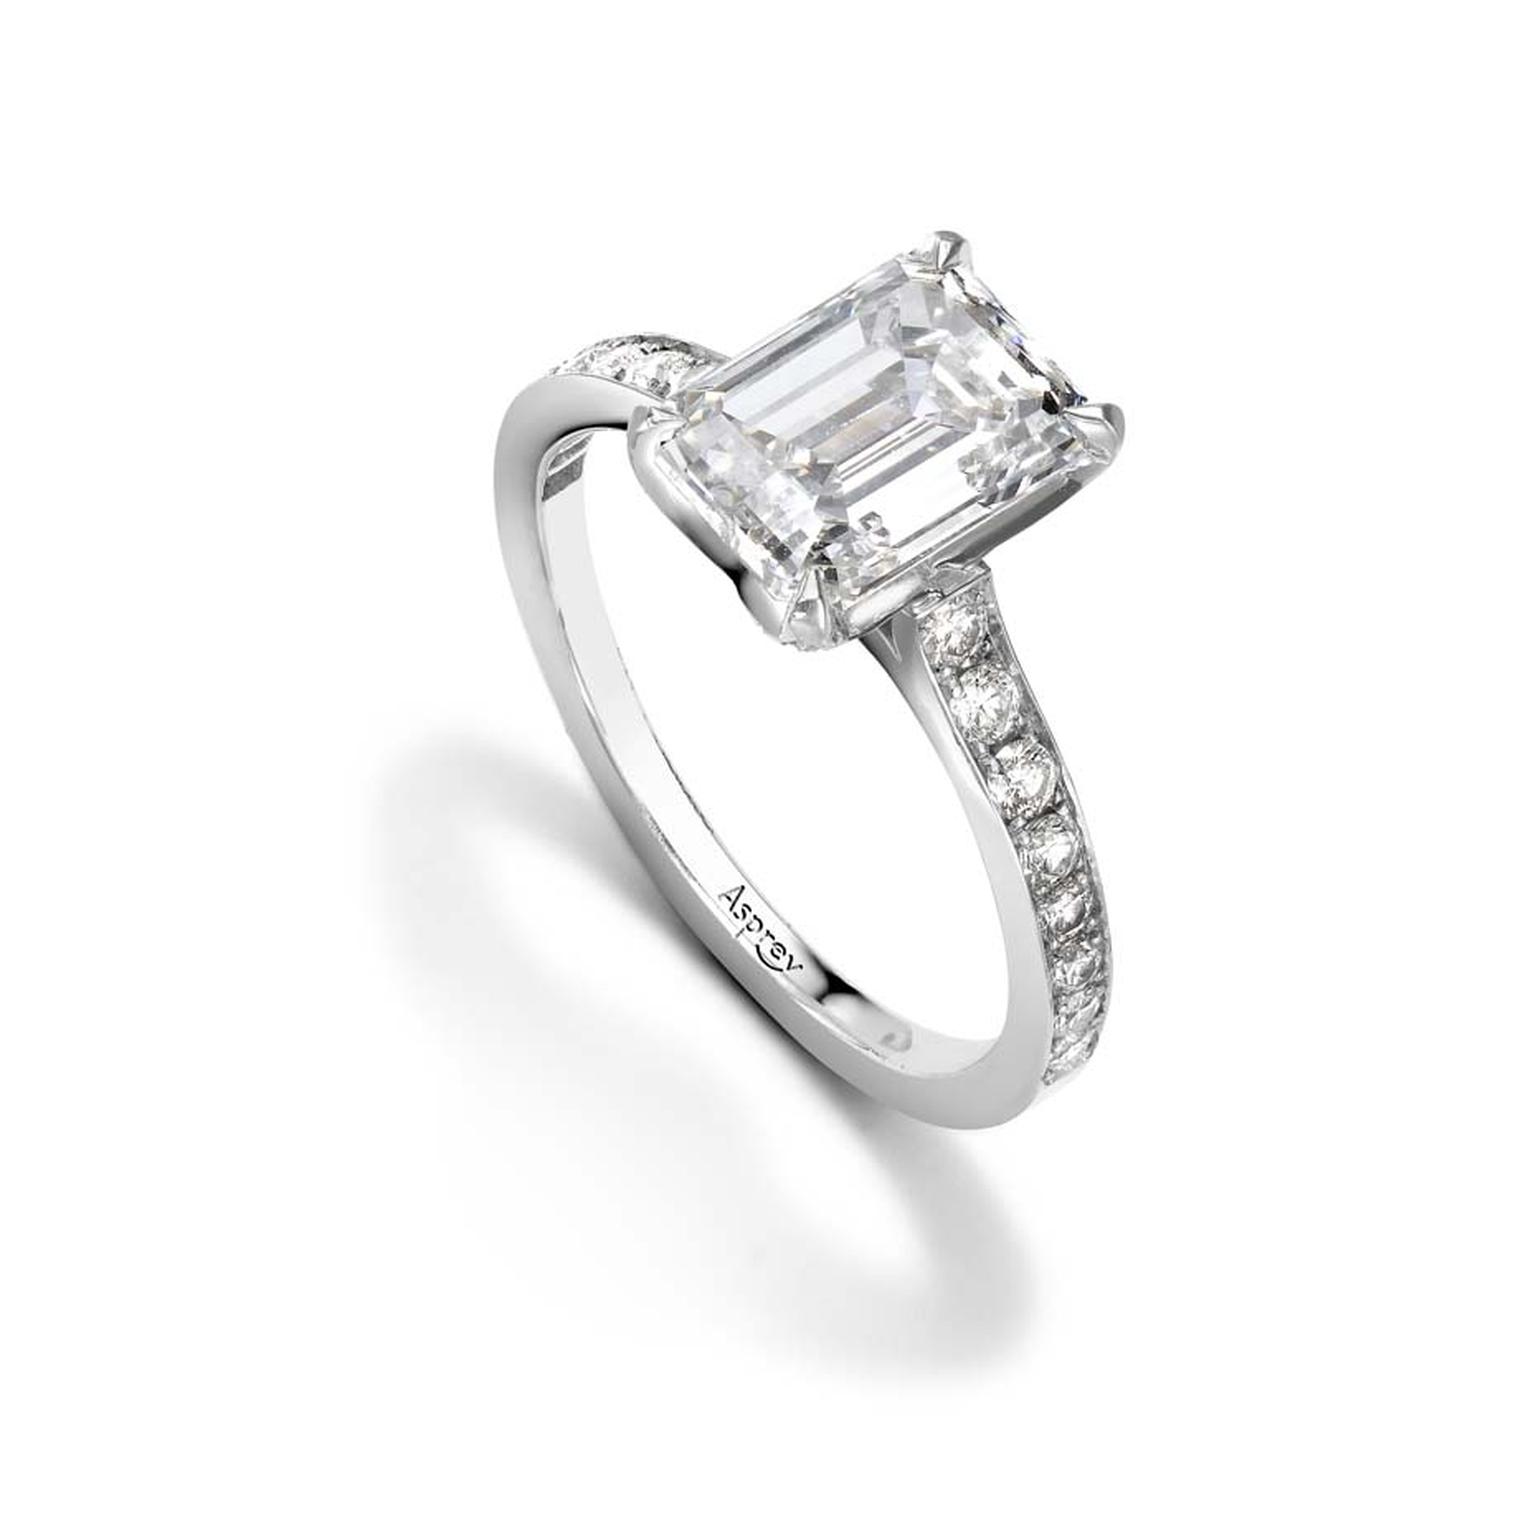 Asprey emerald-cut diamond engagement ring set with round brilliant diamonds on a platinum band.